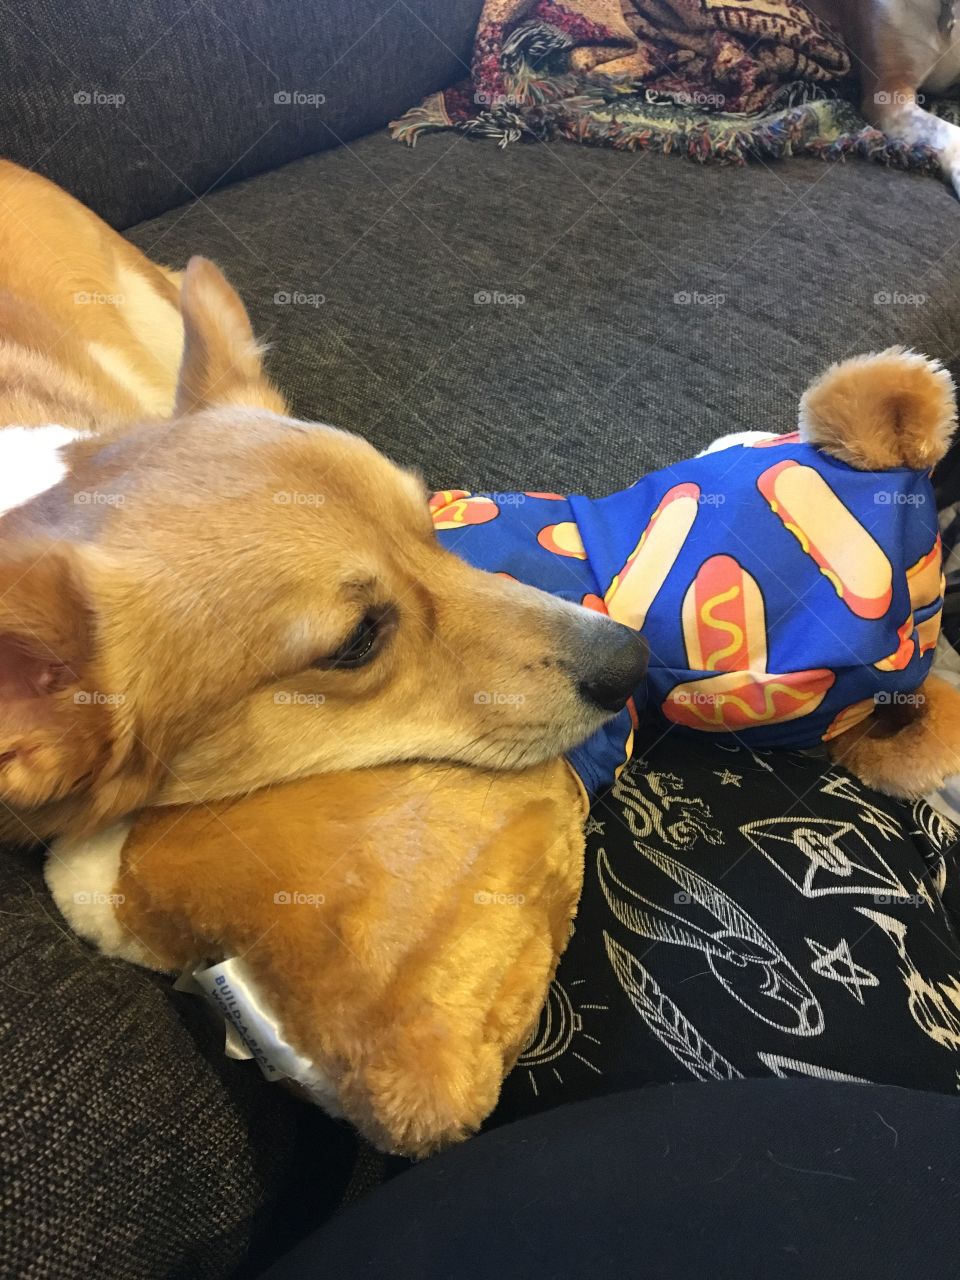 Corgi laying on corgi toy funny hotdog sleepy puppy dog